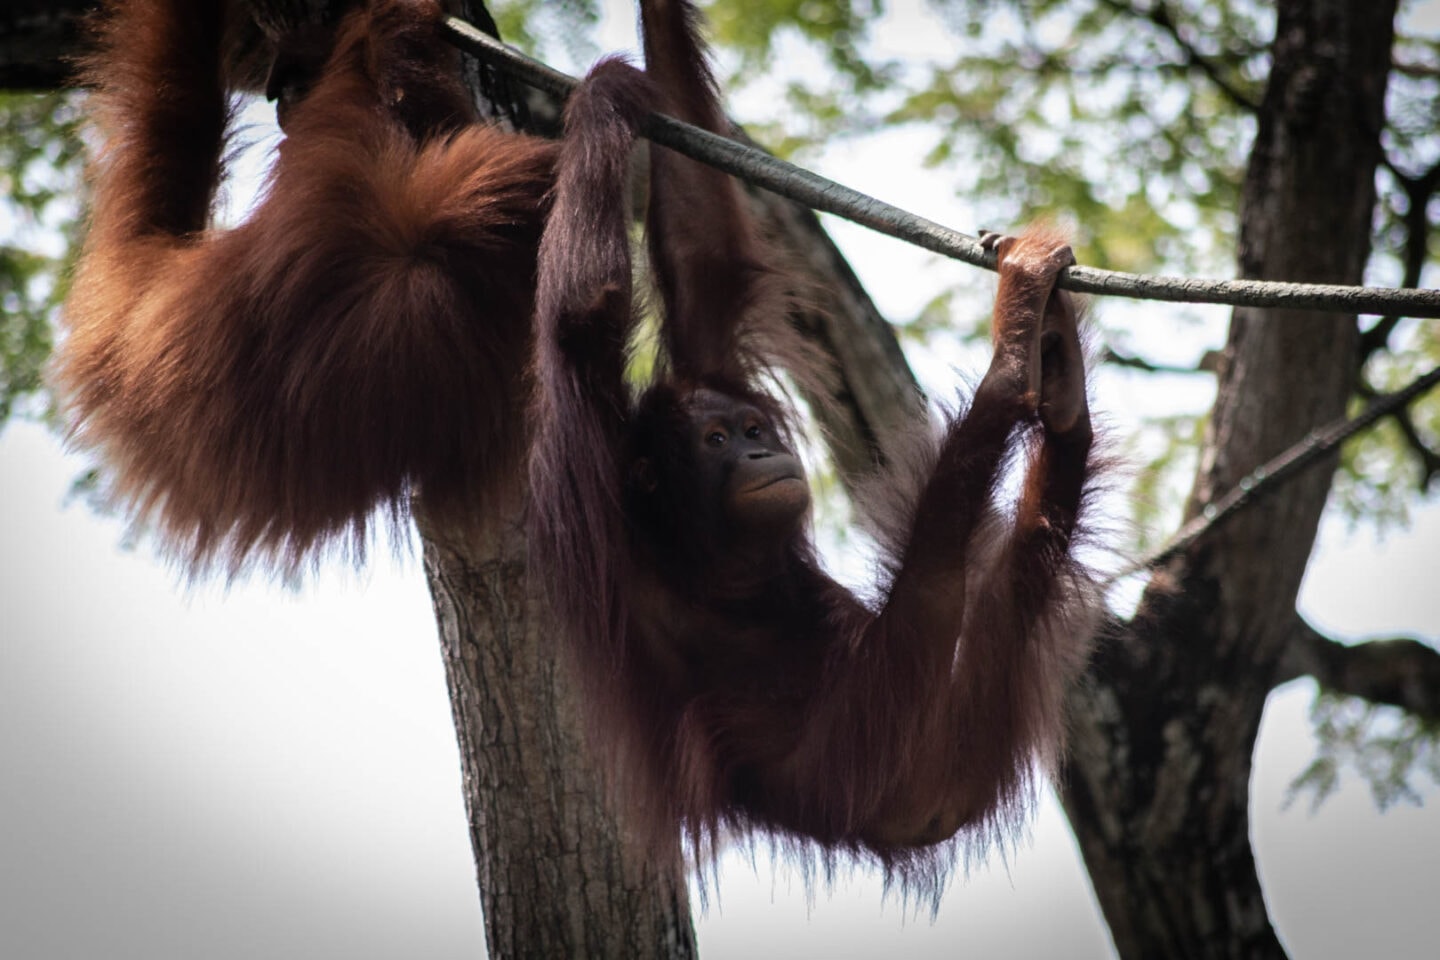 Singapore Zoo breakfast with orangutans